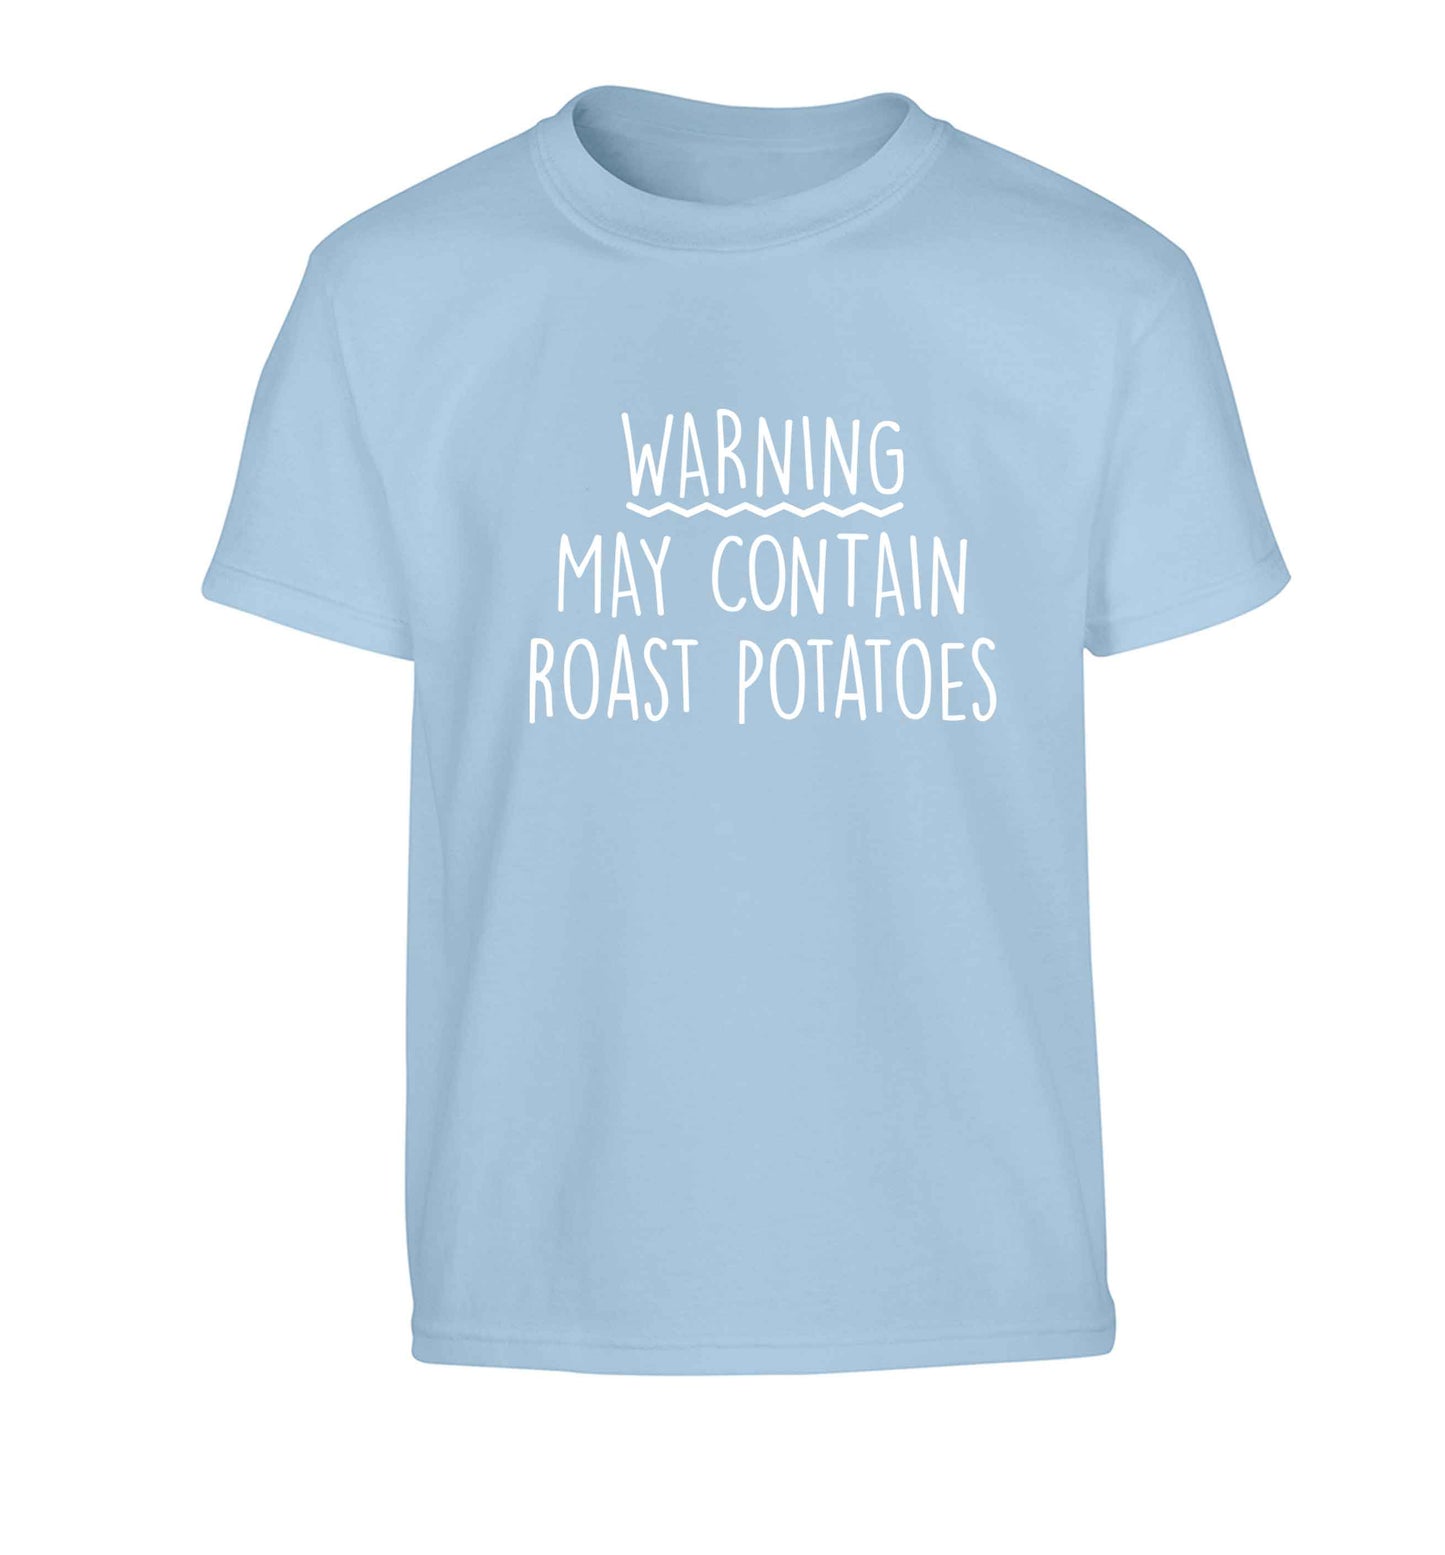 Warning may containg roast potatoes Children's light blue Tshirt 12-13 Years